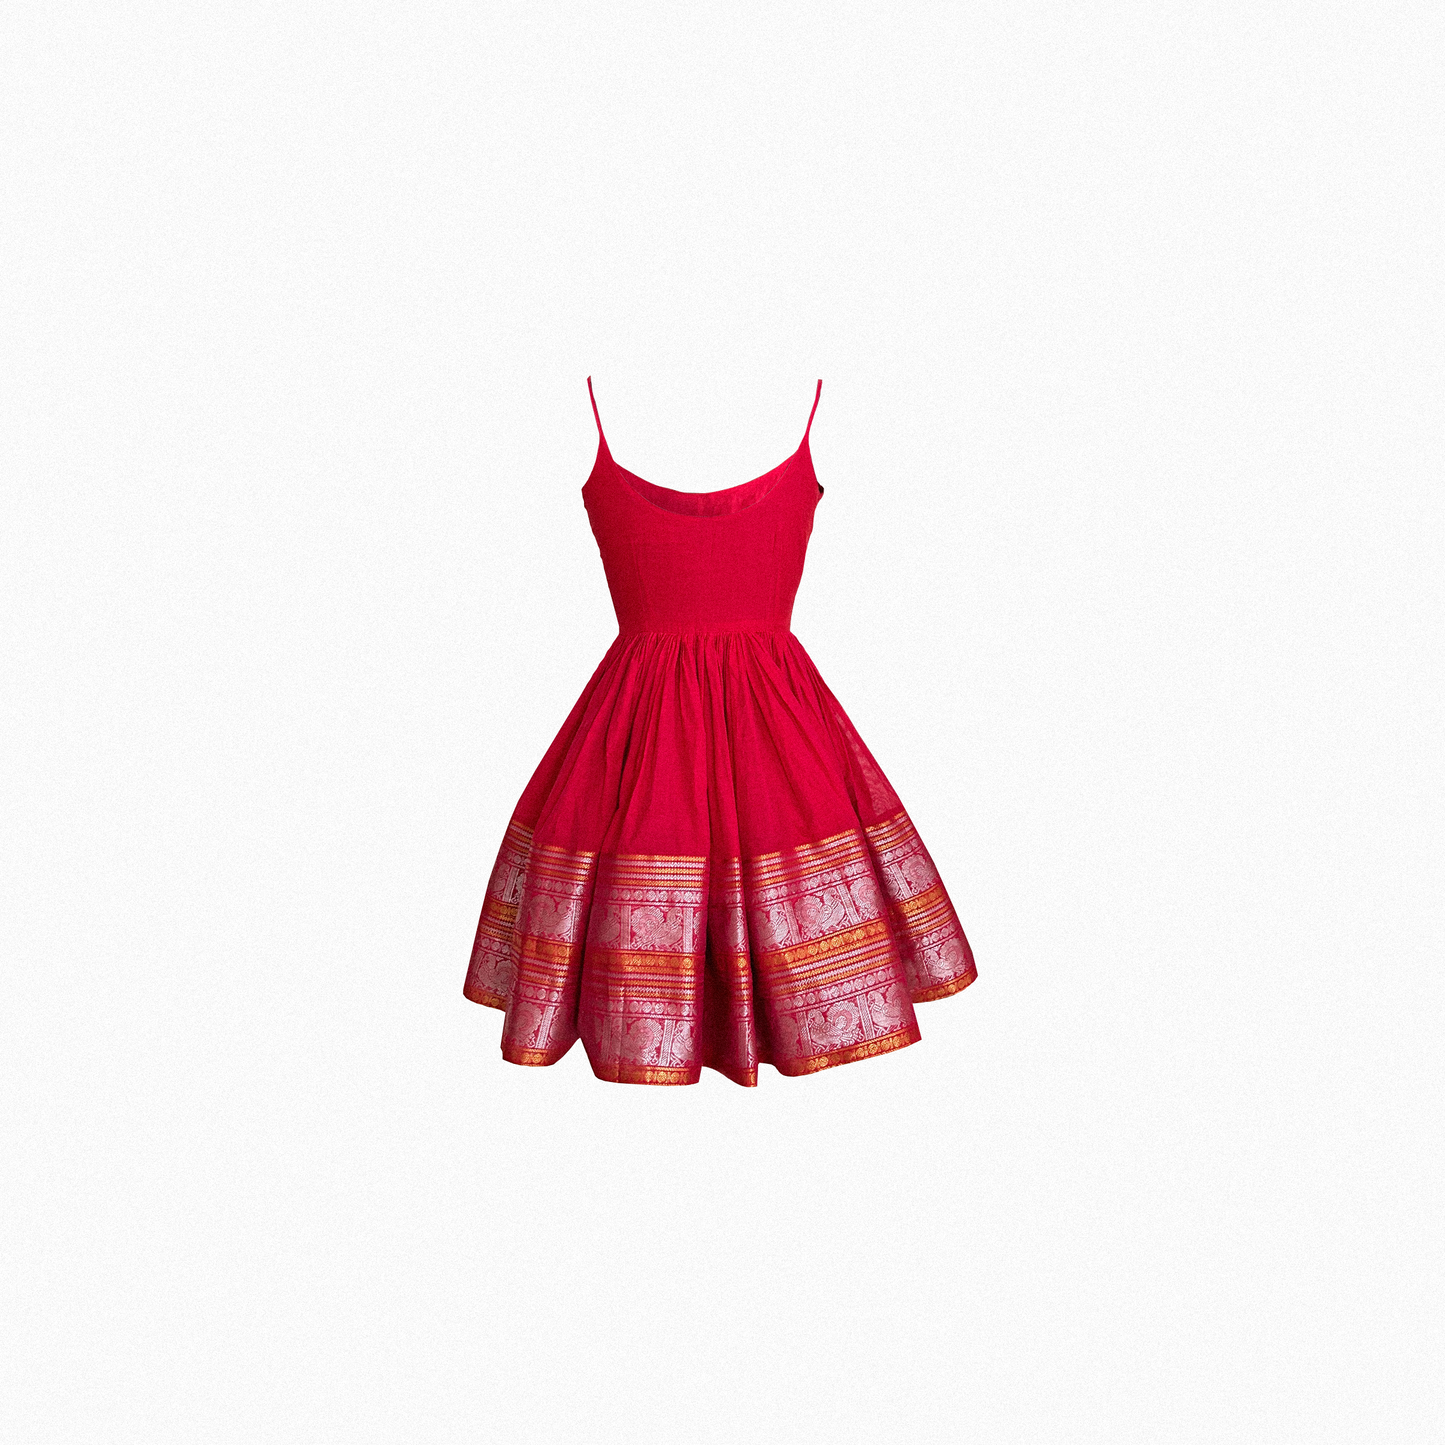 Stunning in Red Dress